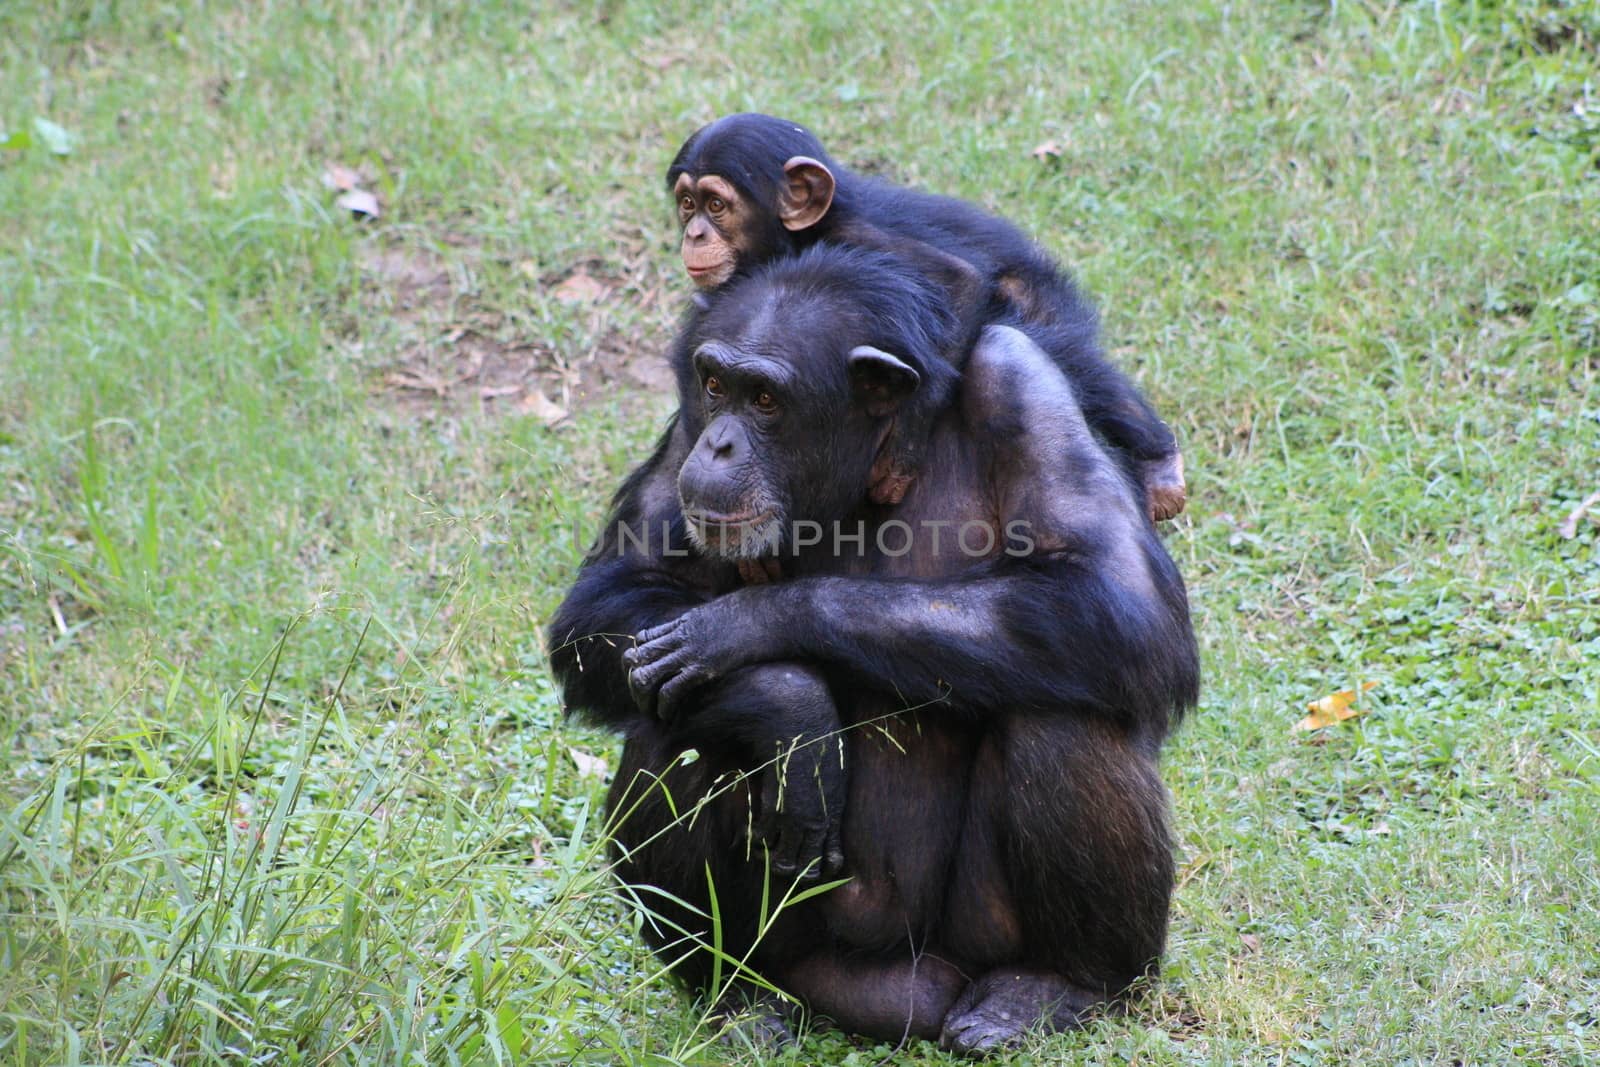 Two chimps in grassy habitat